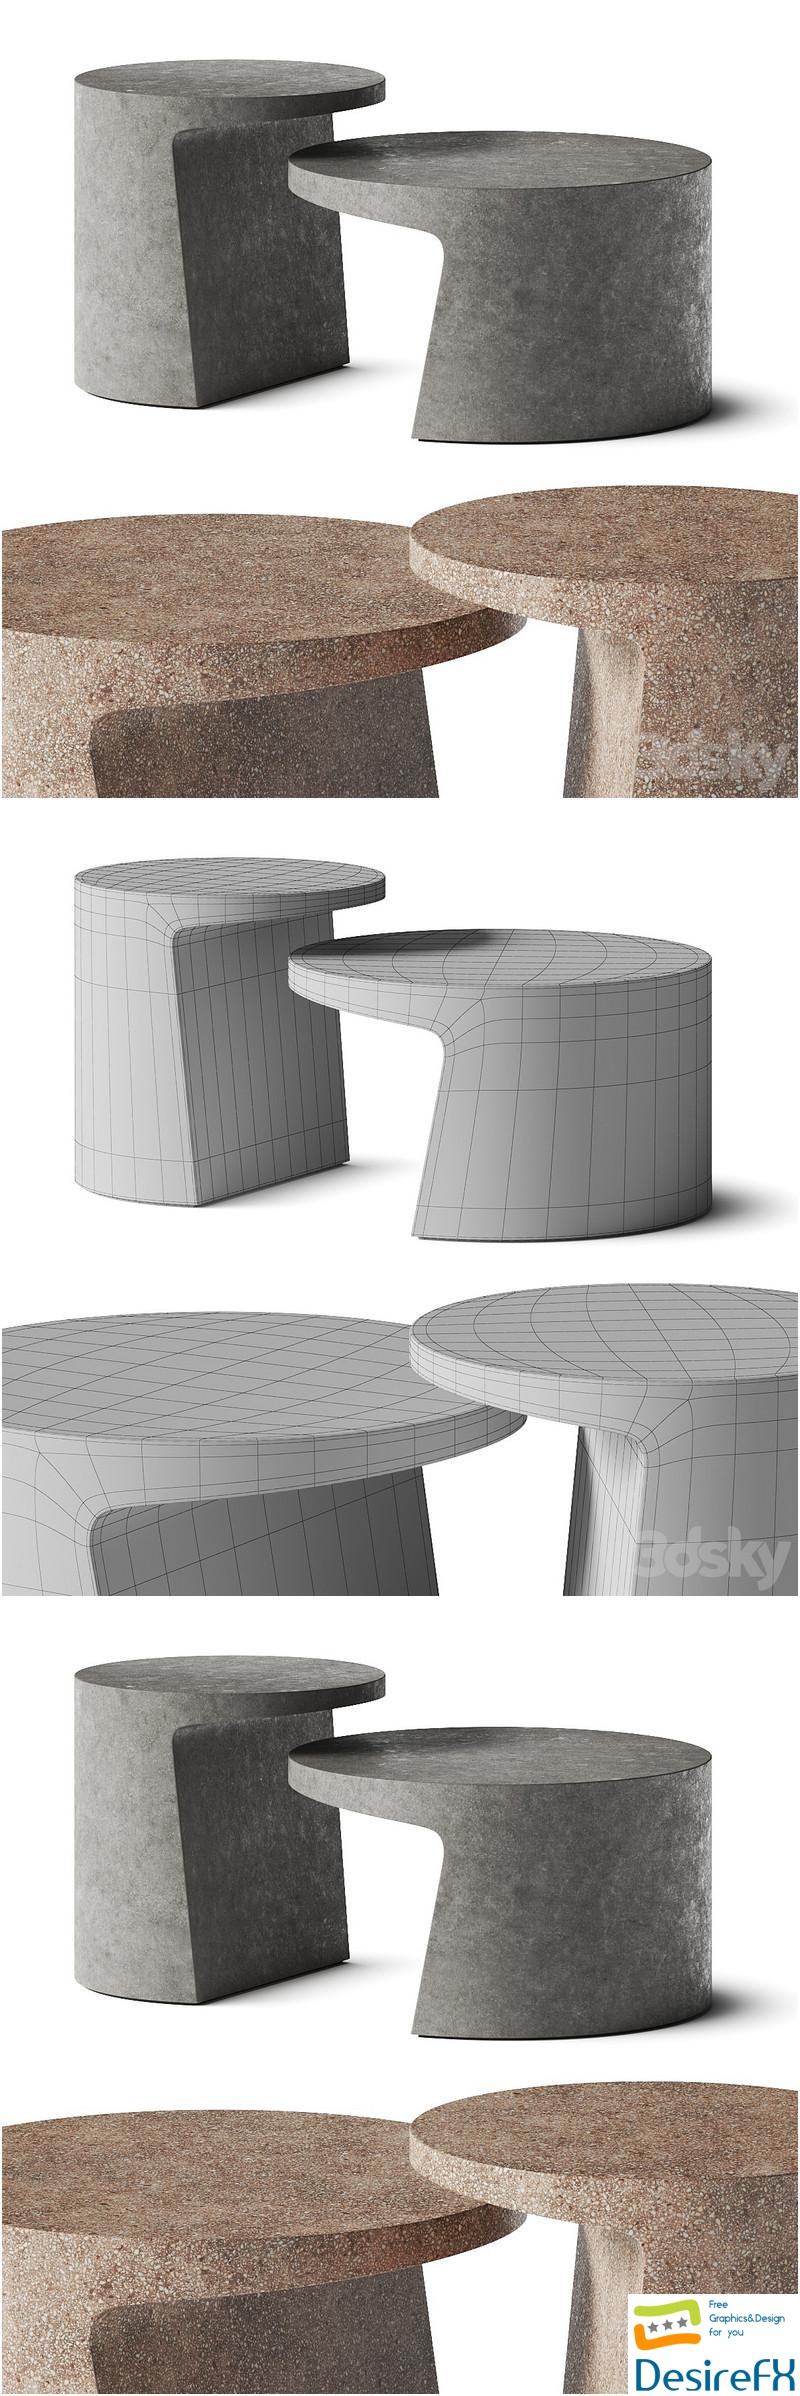 Kettal Giro Coffee Tables 3D Model